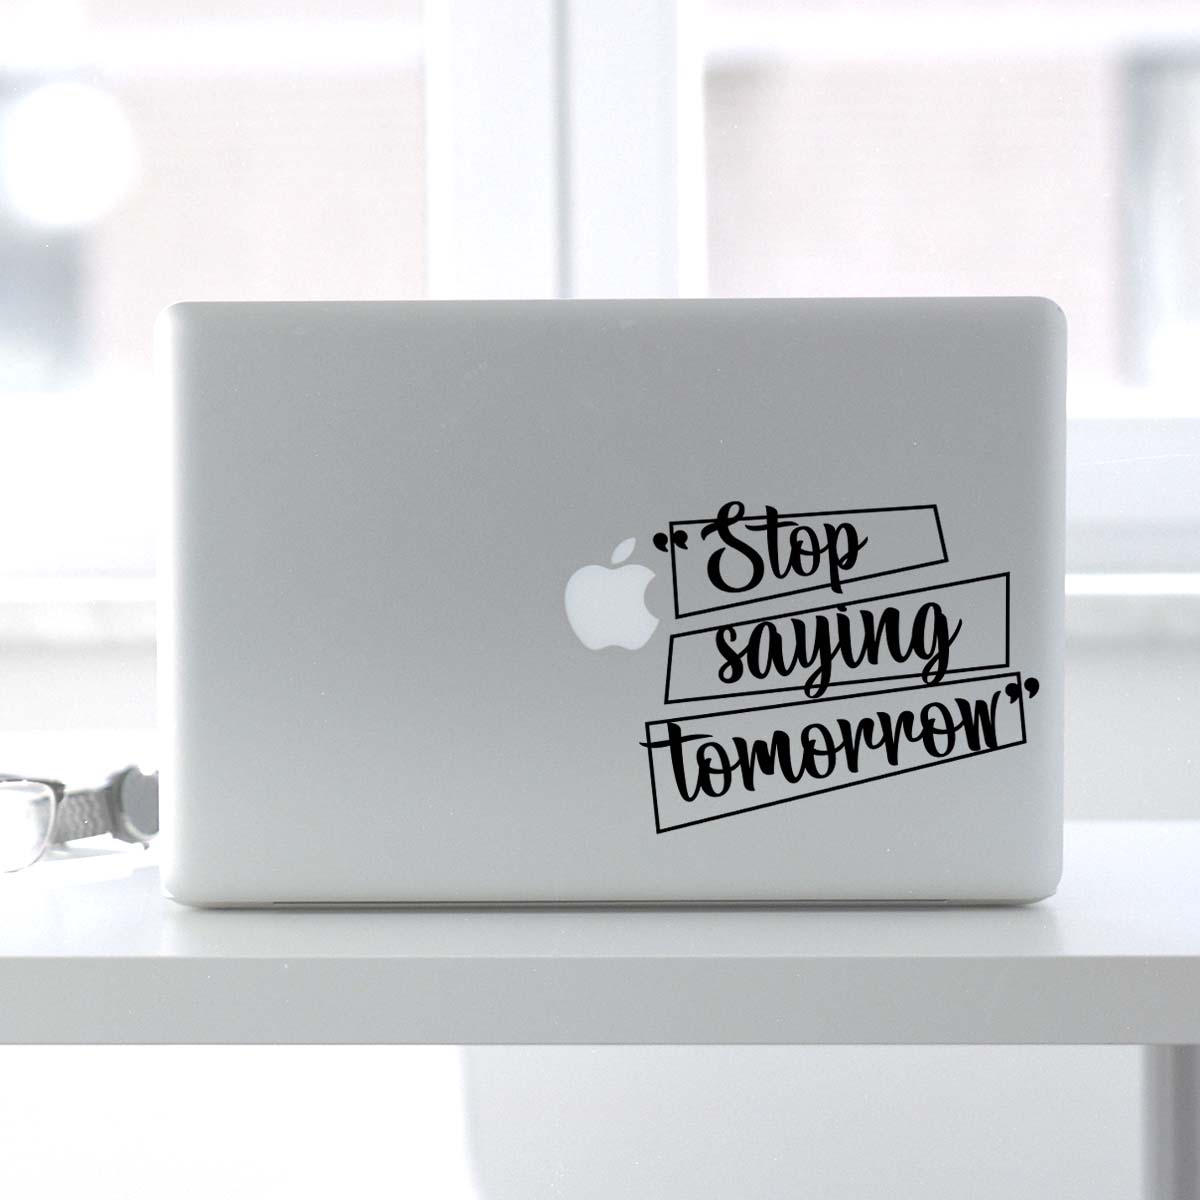 Stop Saying Tomorrow Macbook Decal